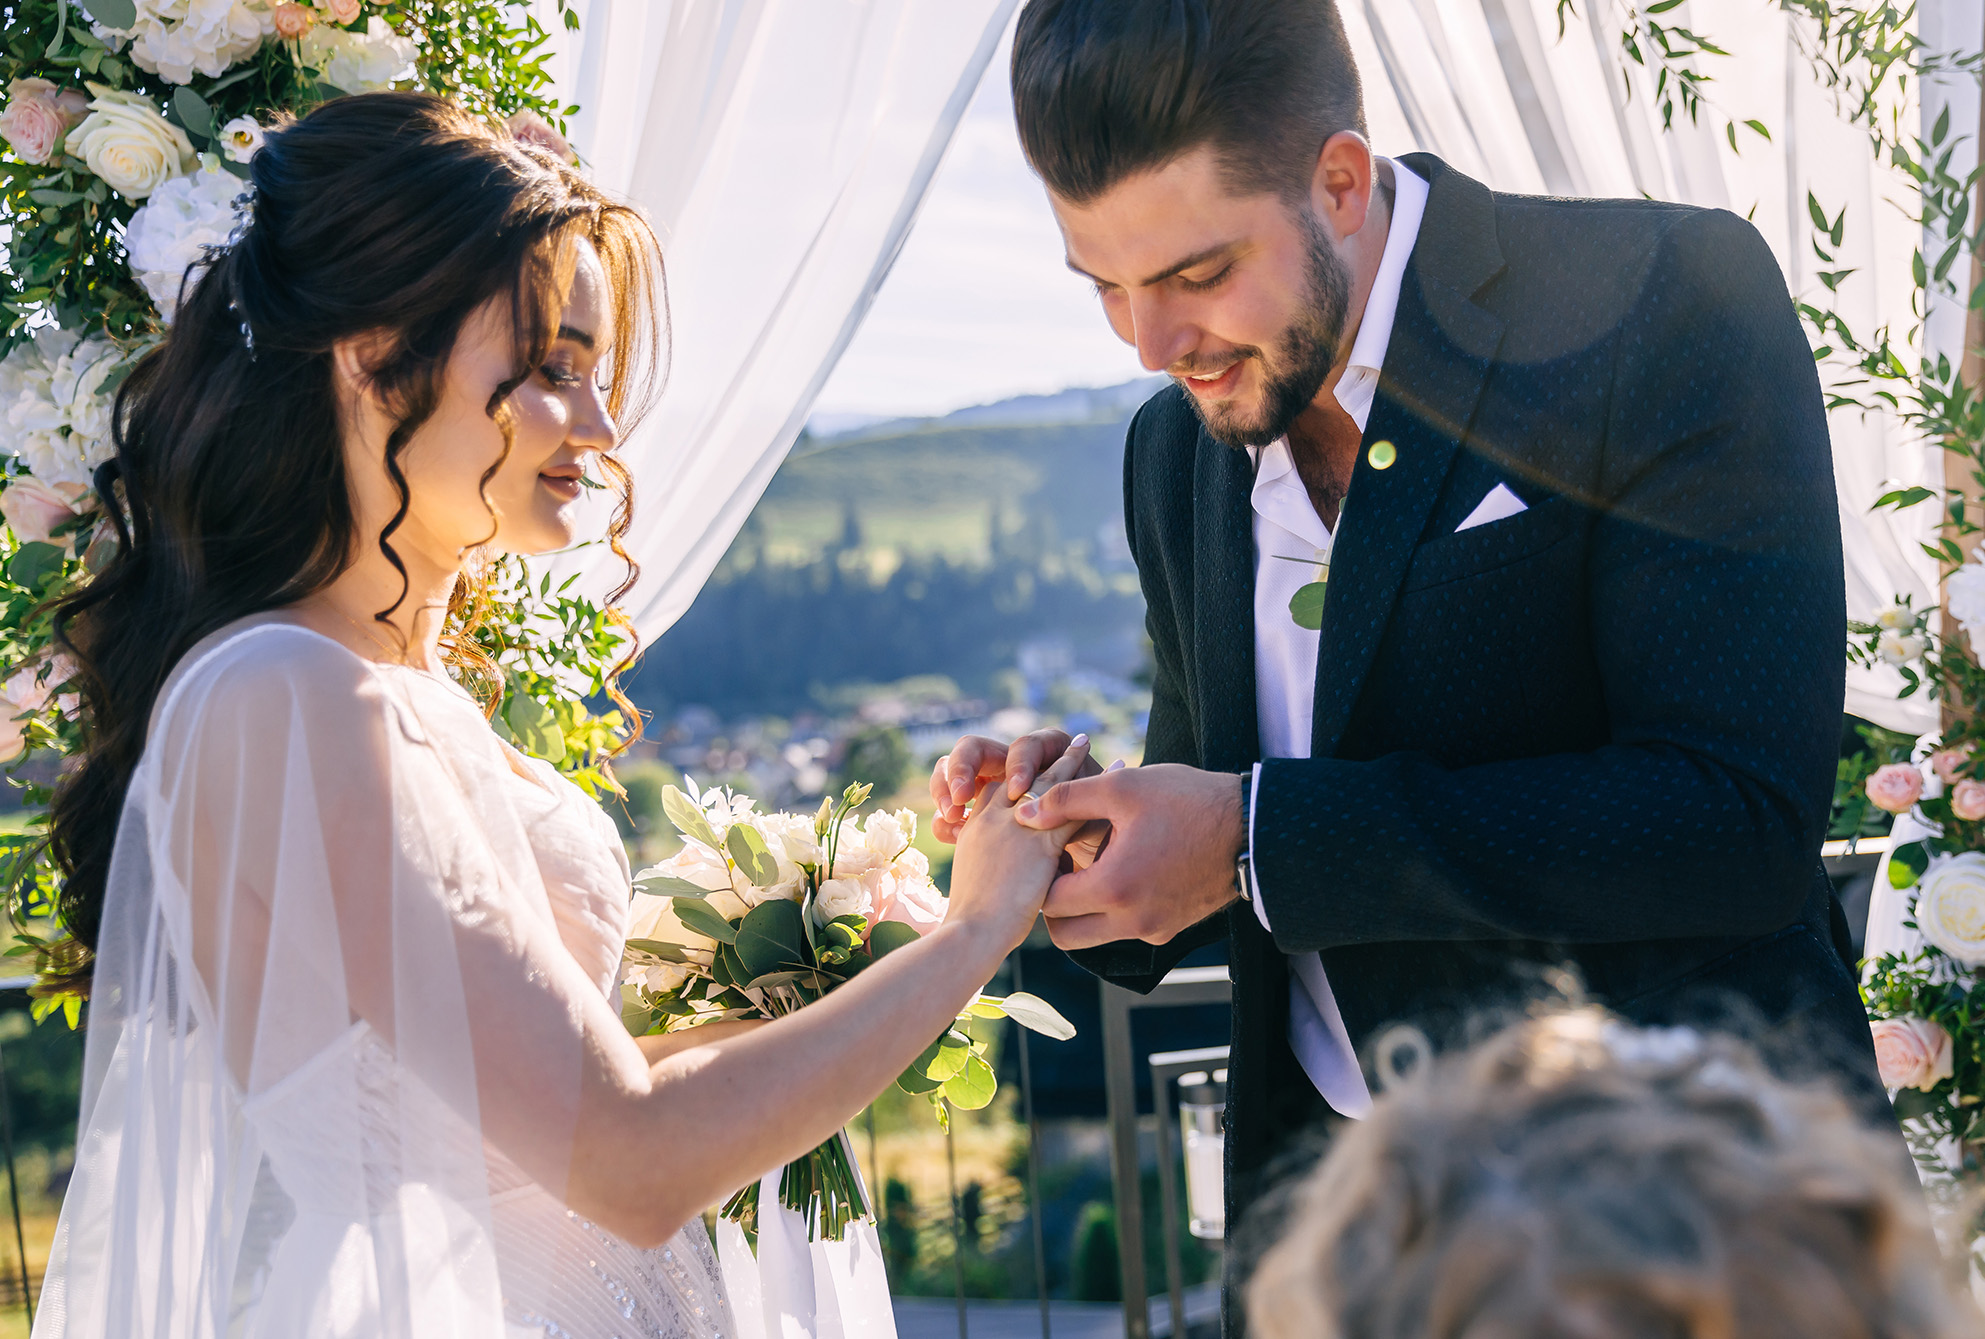 Groom putting wedding ring on bride's finger during wedding ceremony